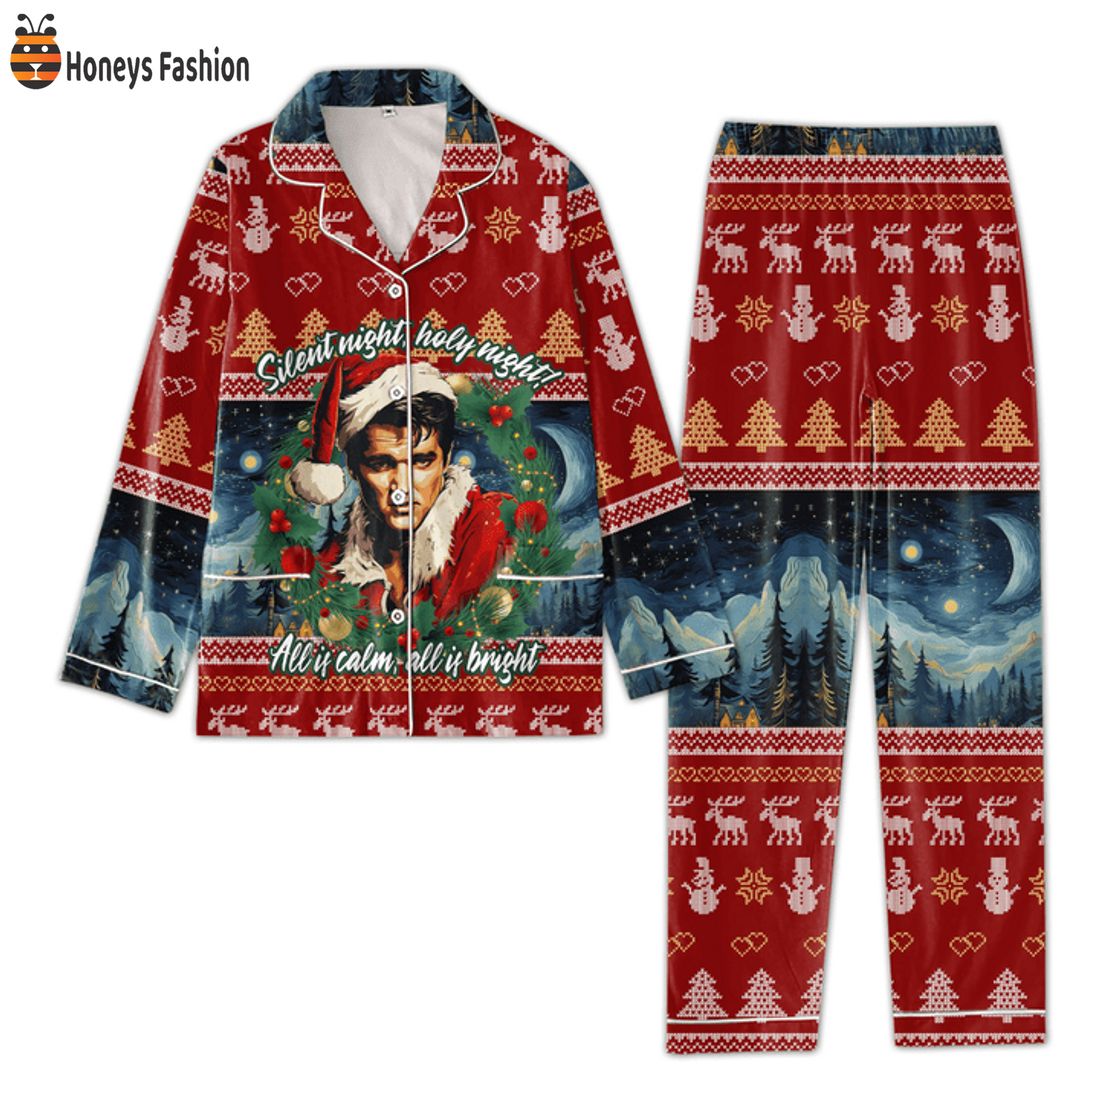 BEST SELLER Elvis Presley Silent Night Holy Night Christmas Pajamas Set